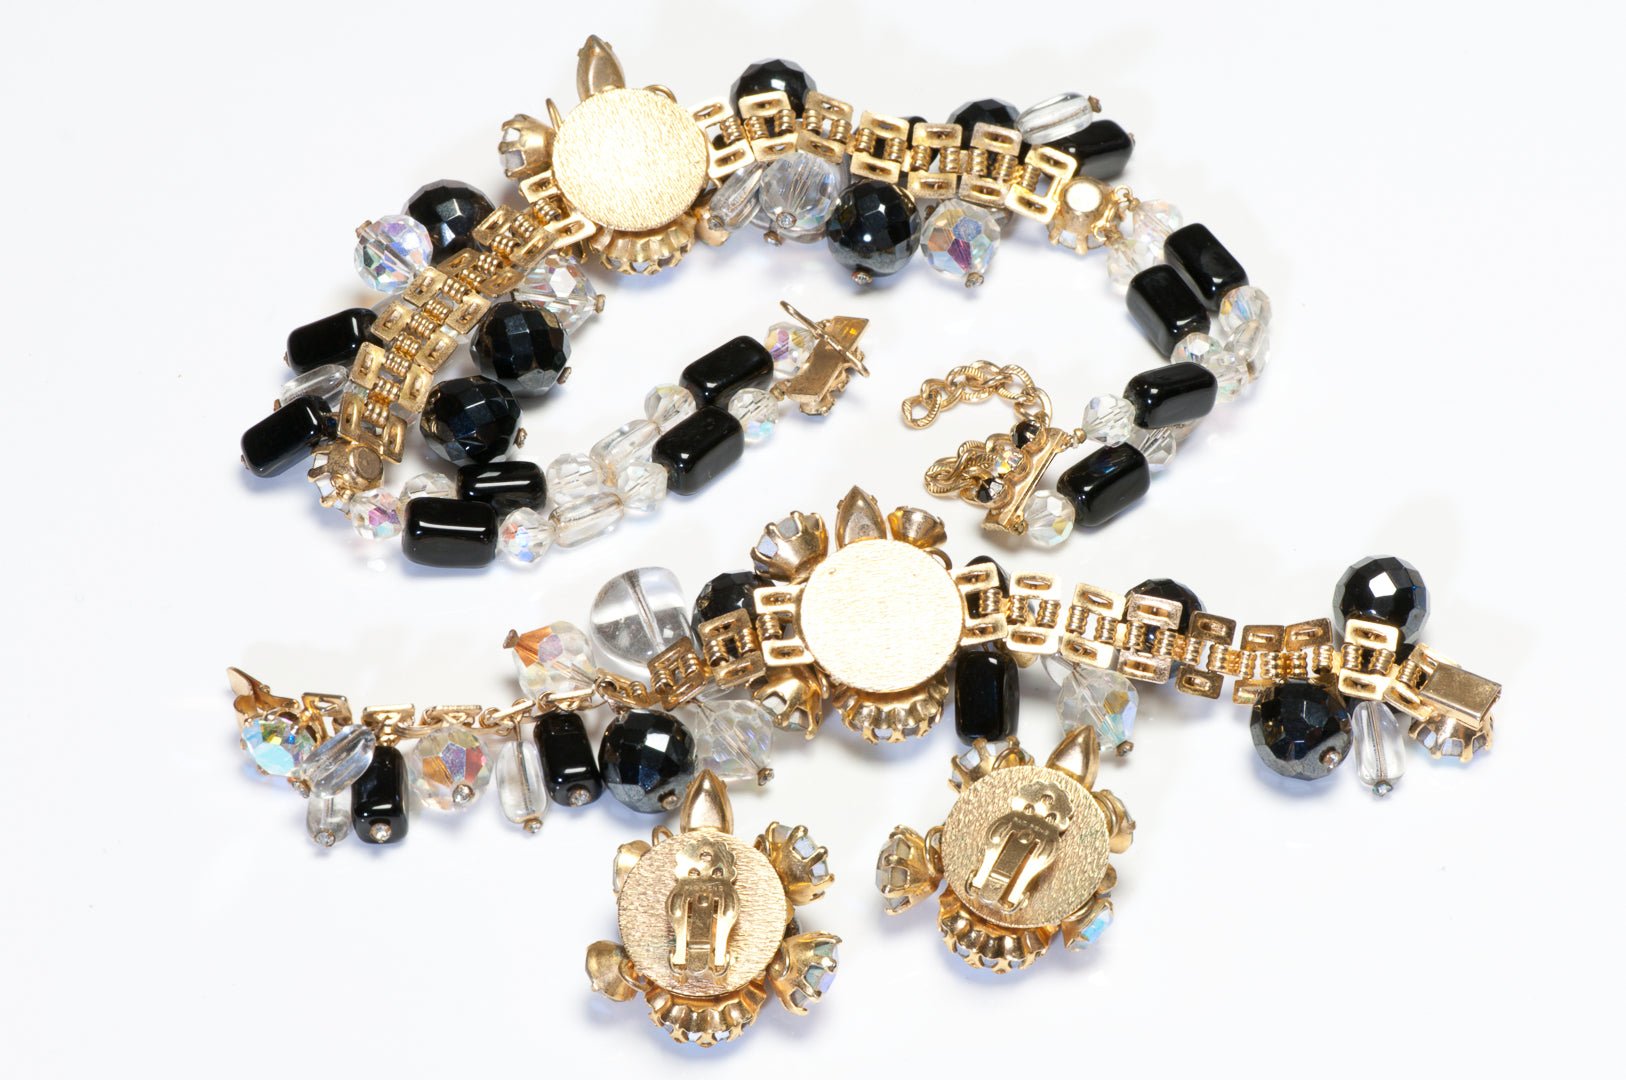 Vintage 1950's Black Glass Beads Aurora Borealis Crystal Necklace Bracelet Earrings Set